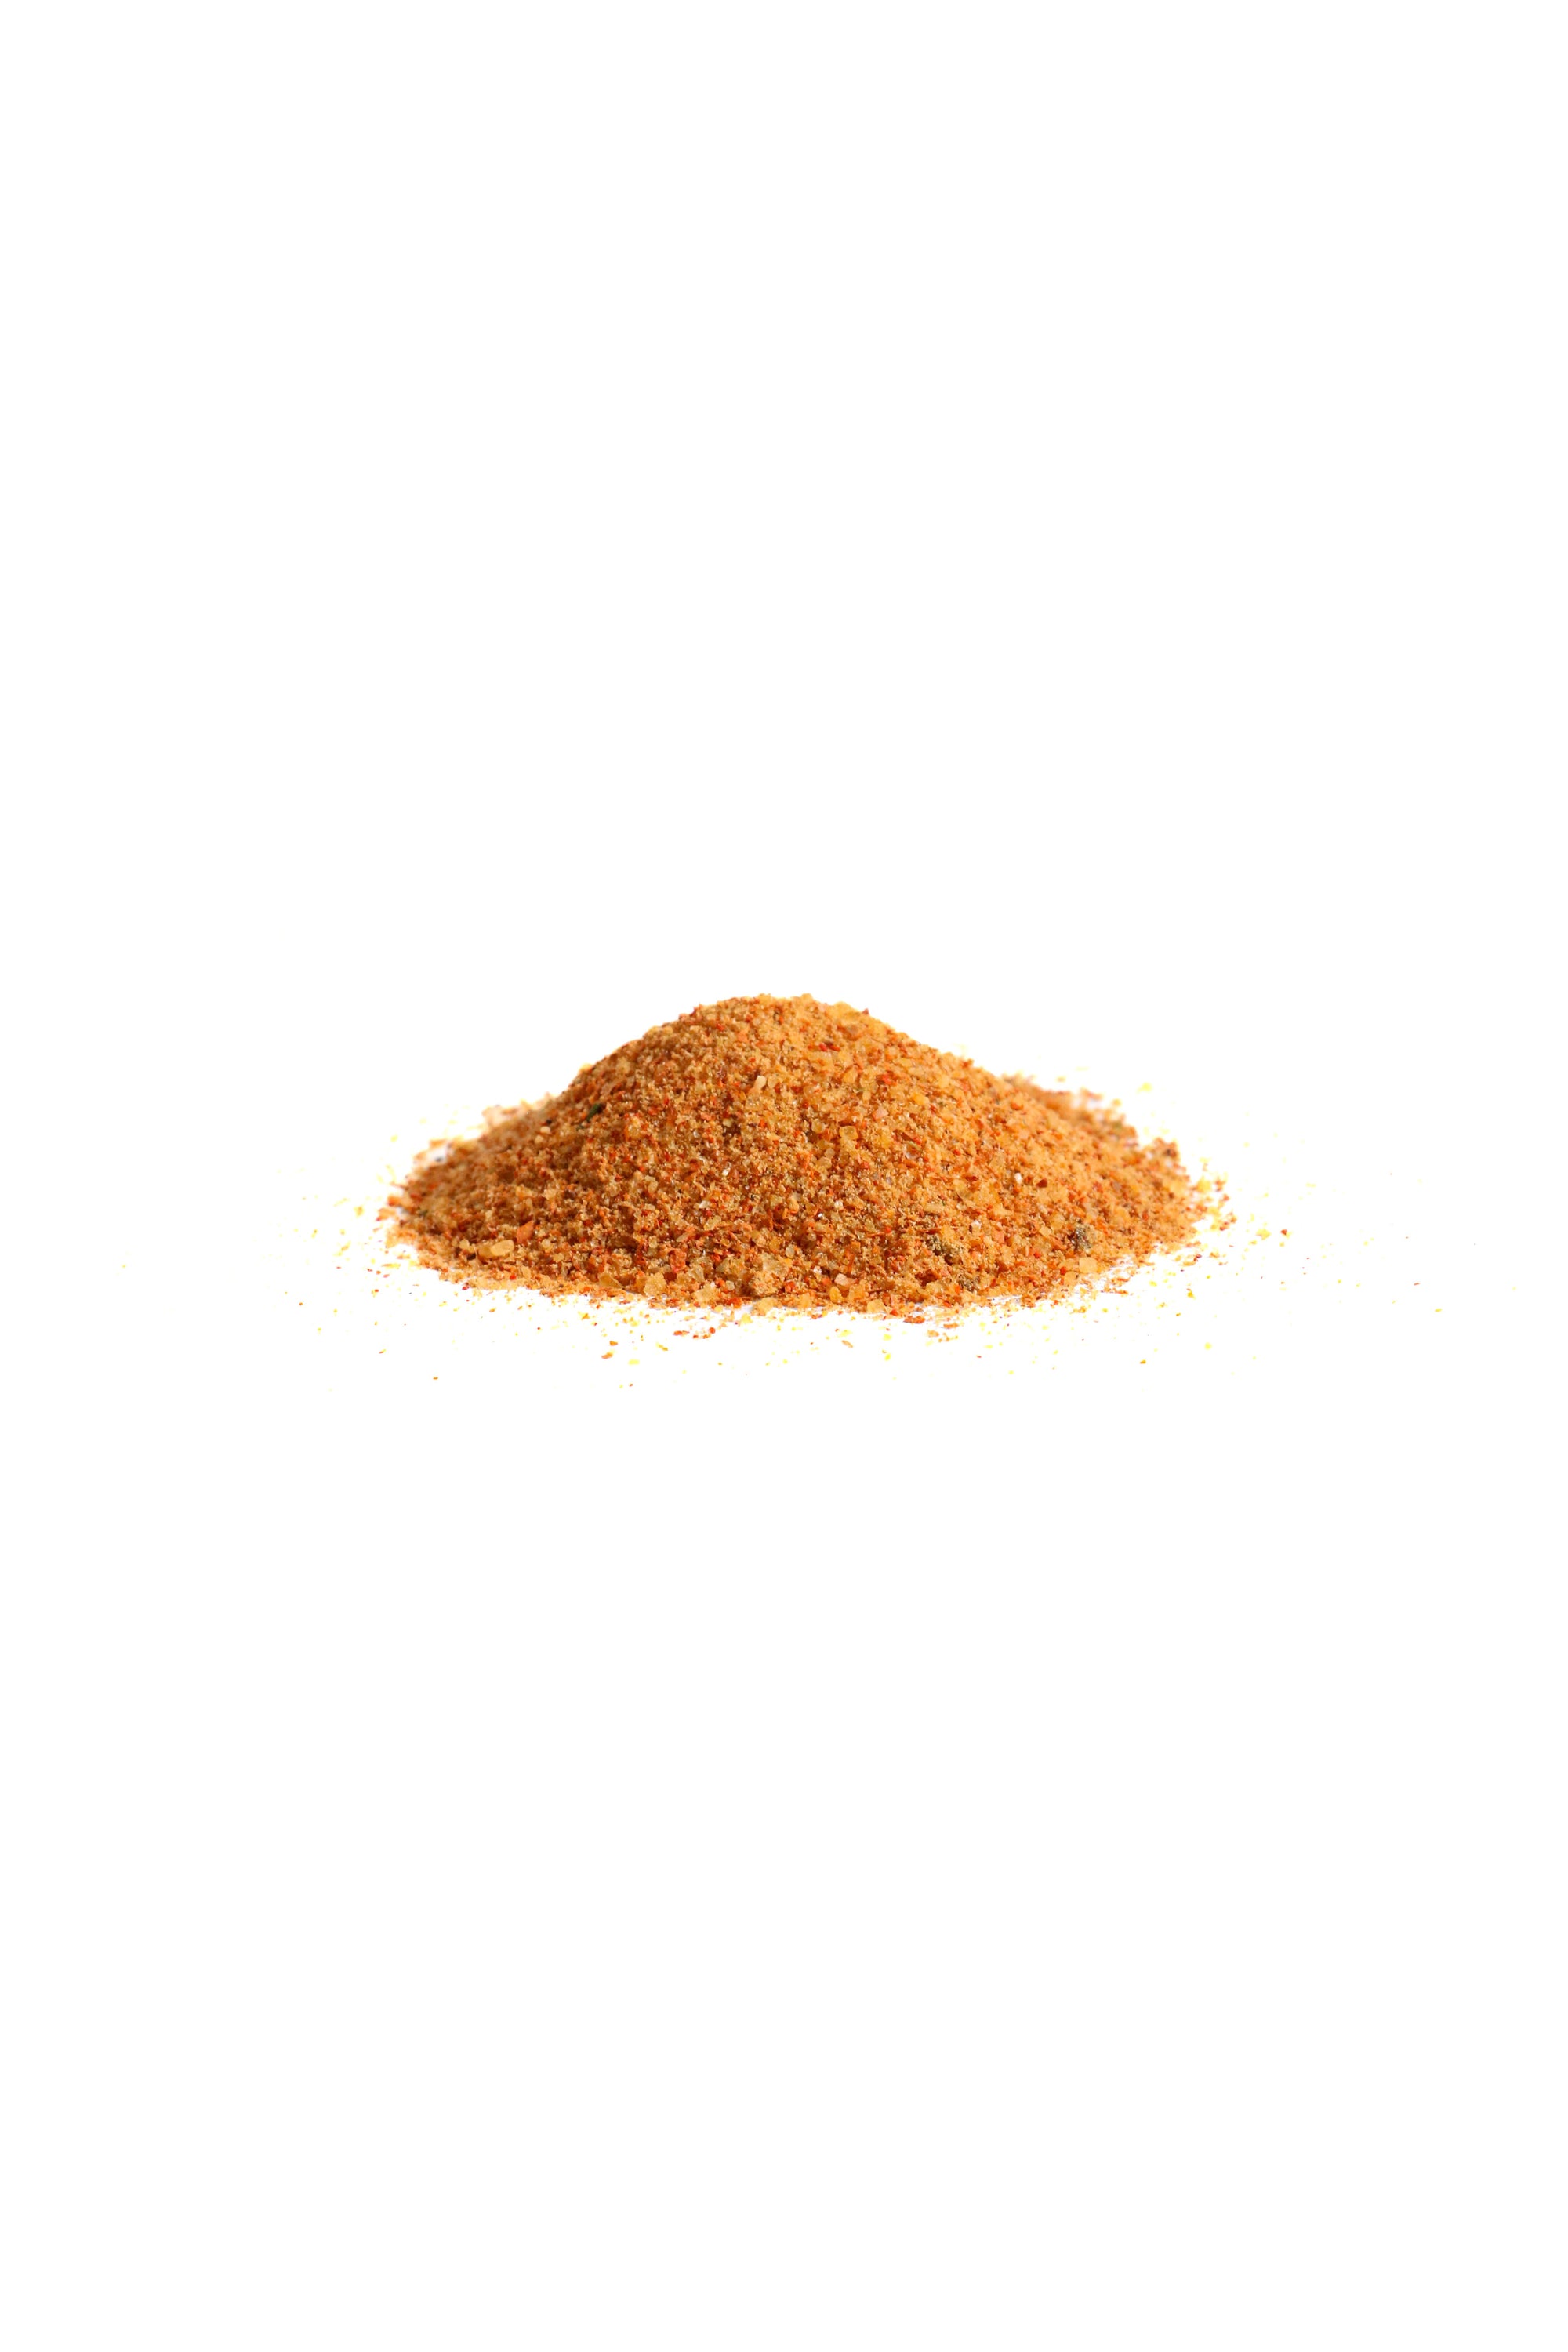 Macho Spice 5KG